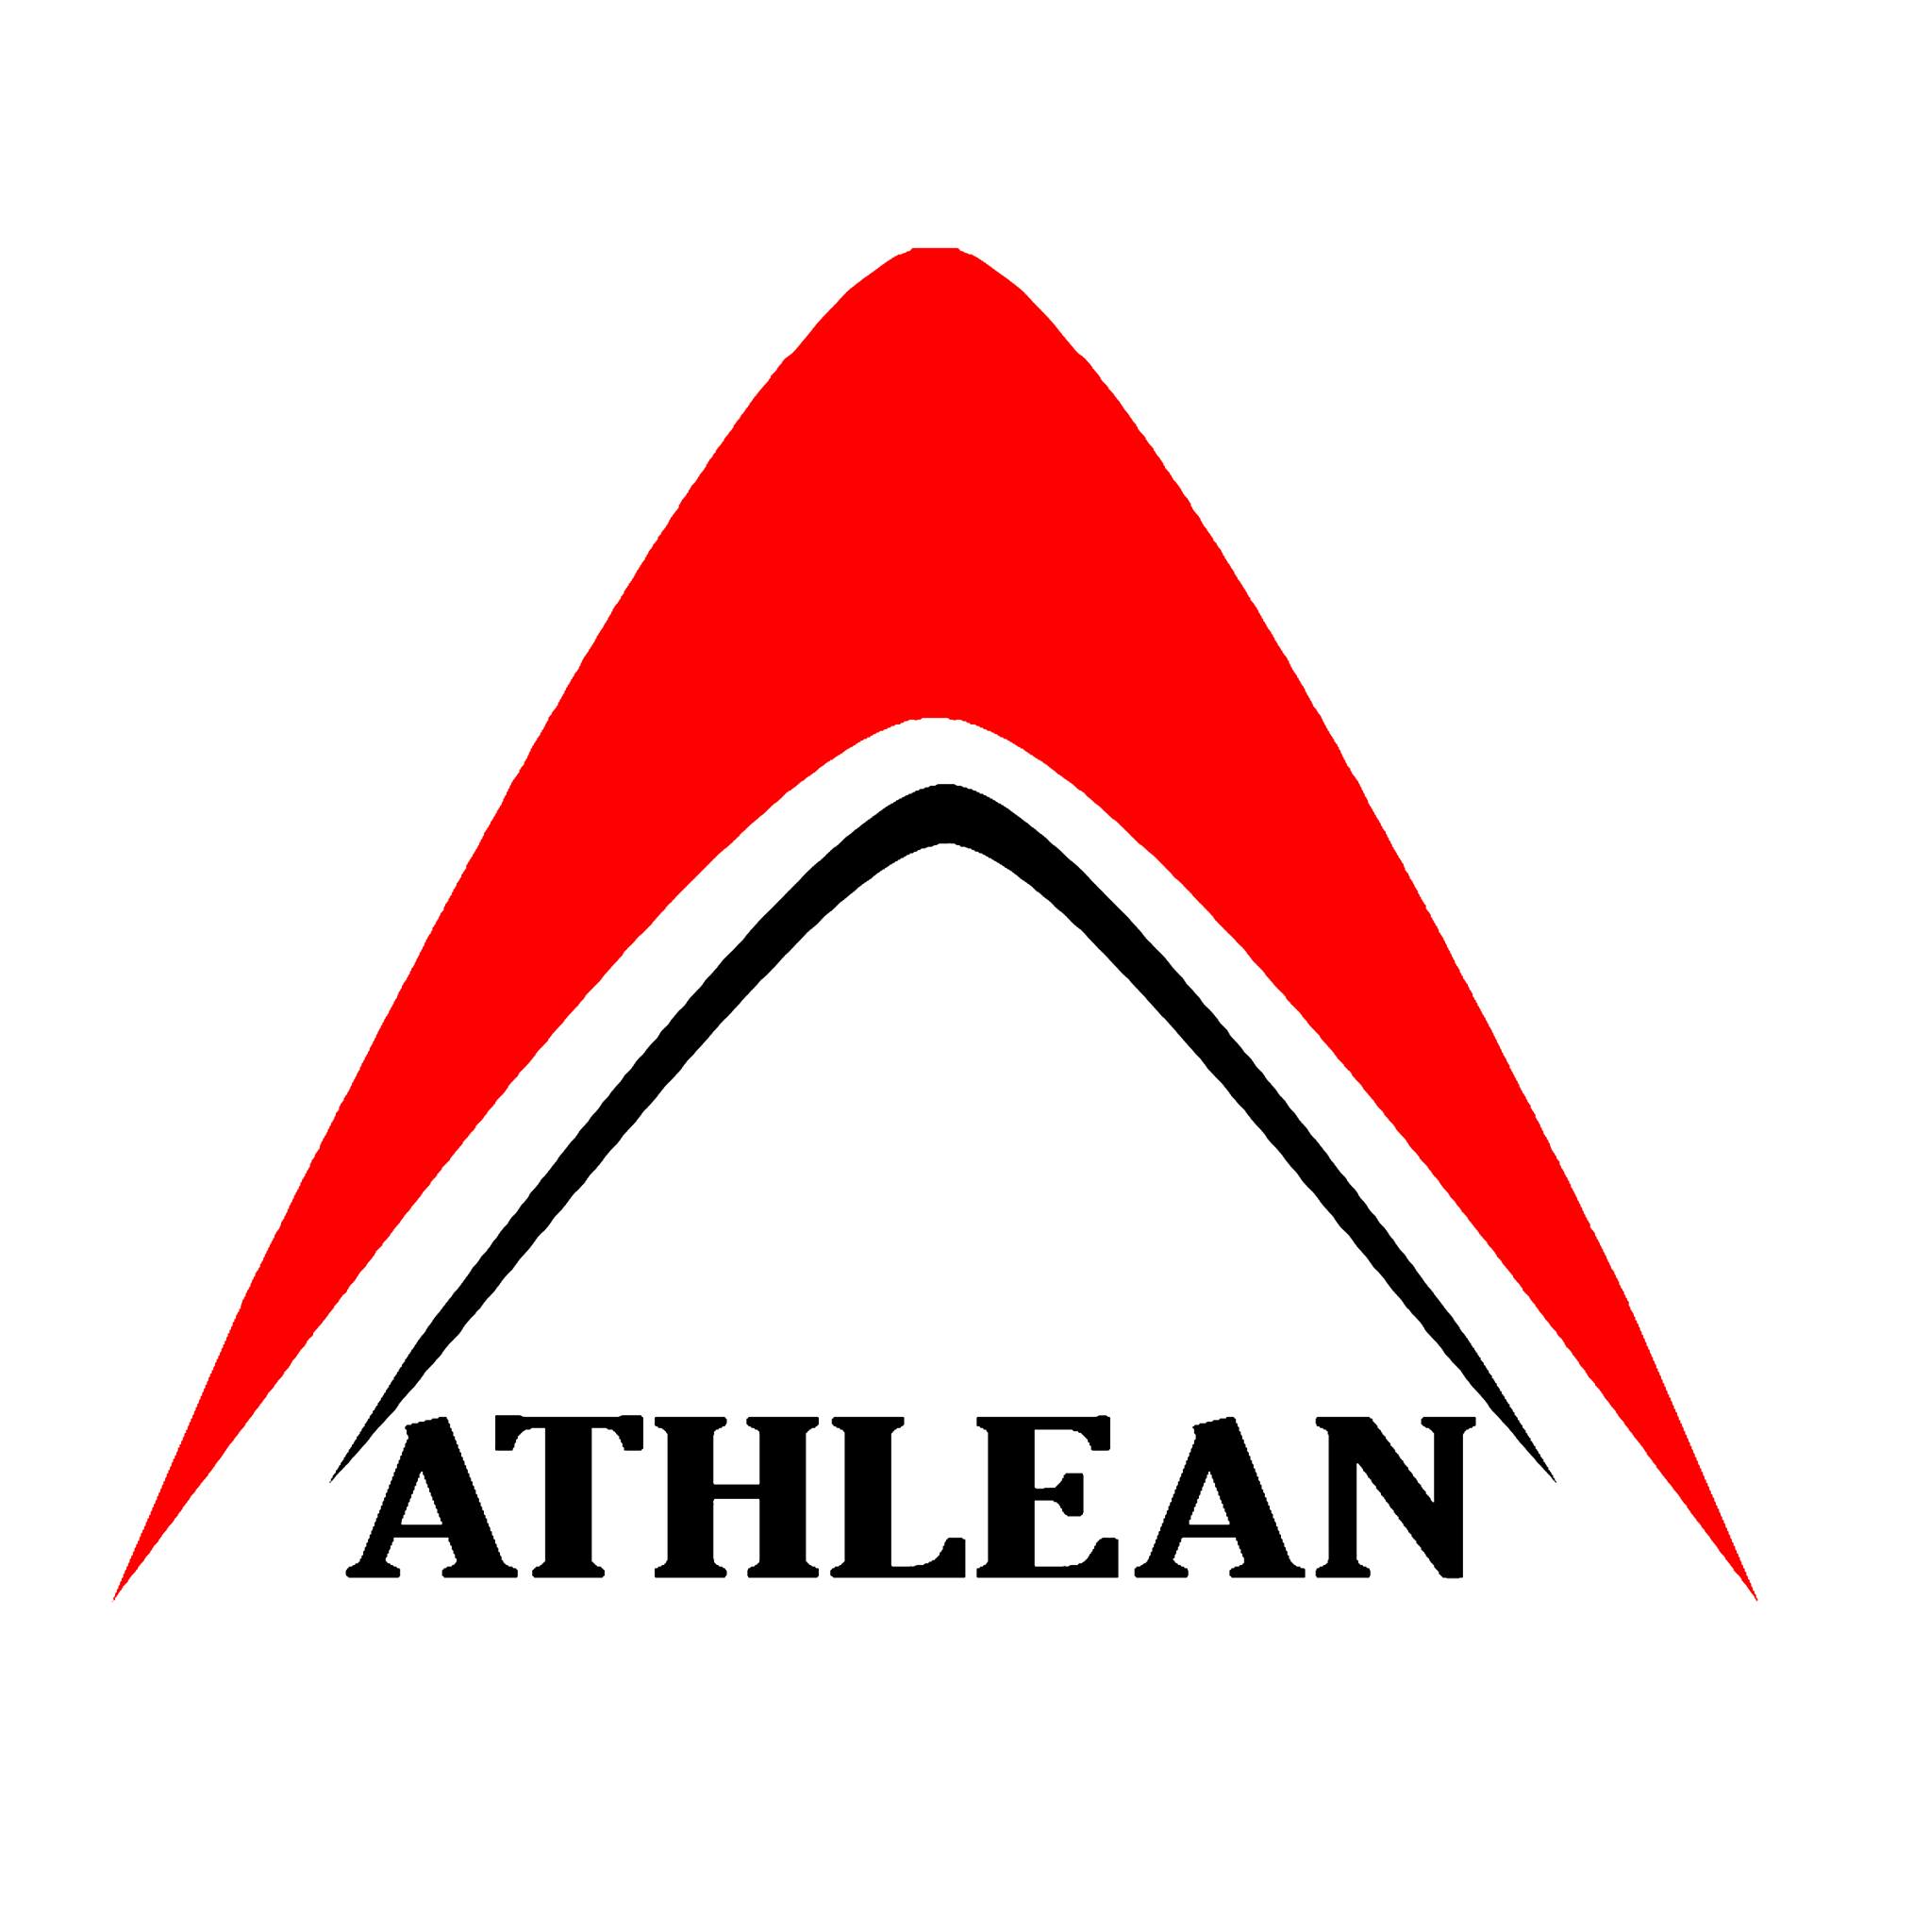 Athlean Fitness Club - Logo